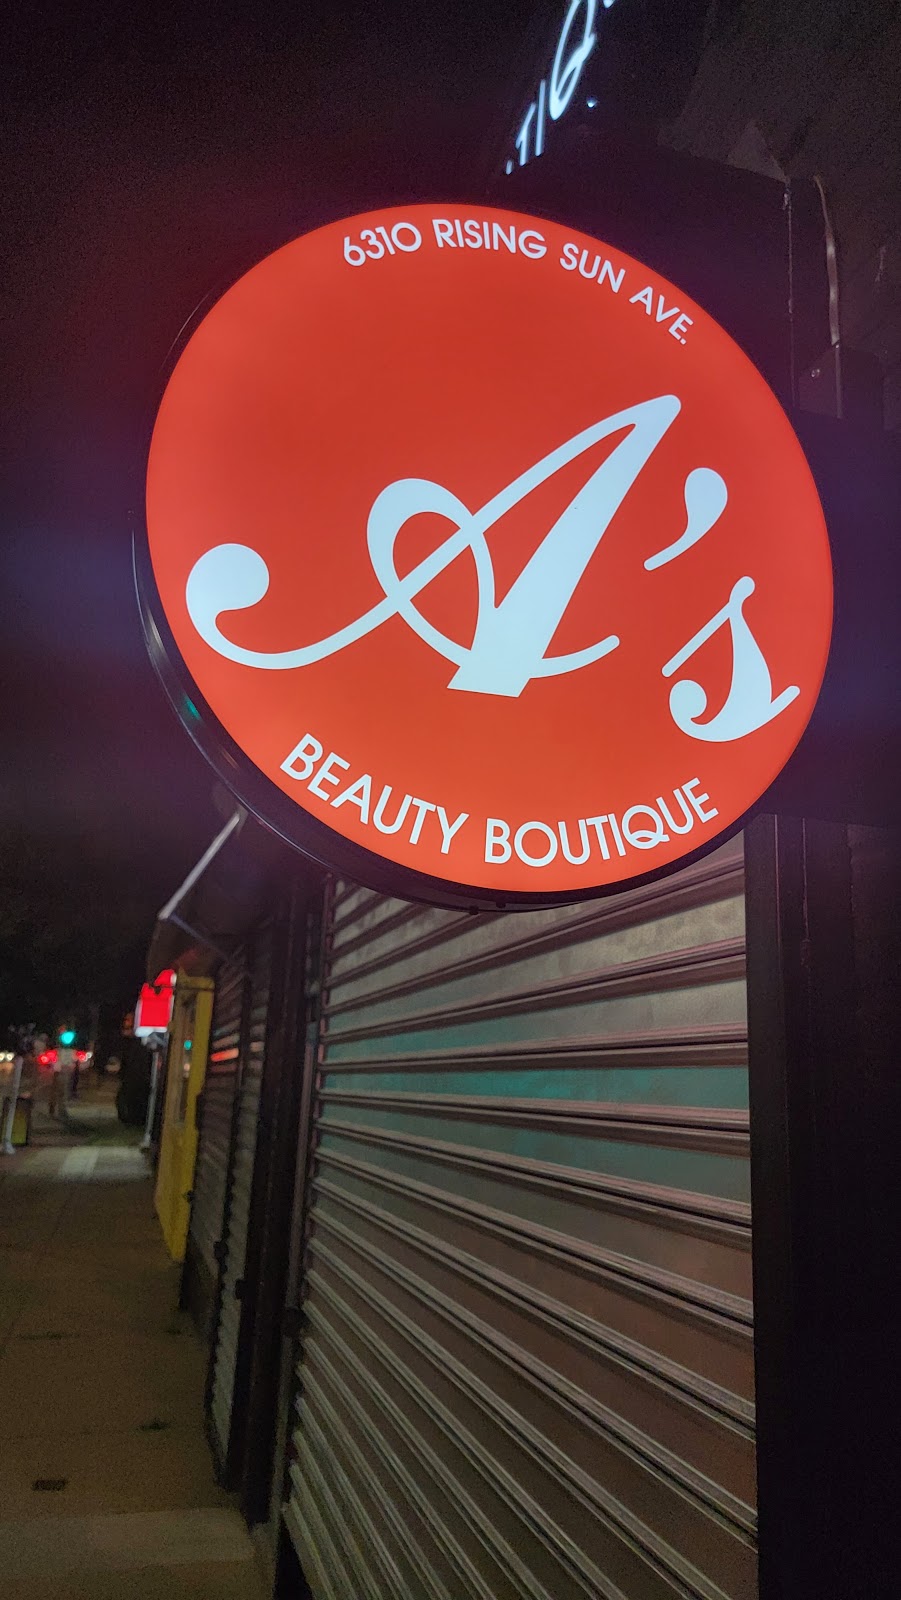 As Beauty Boutique | 6310 Rising Sun Ave, Philadelphia, PA 19111 | Phone: (267) 907-6998